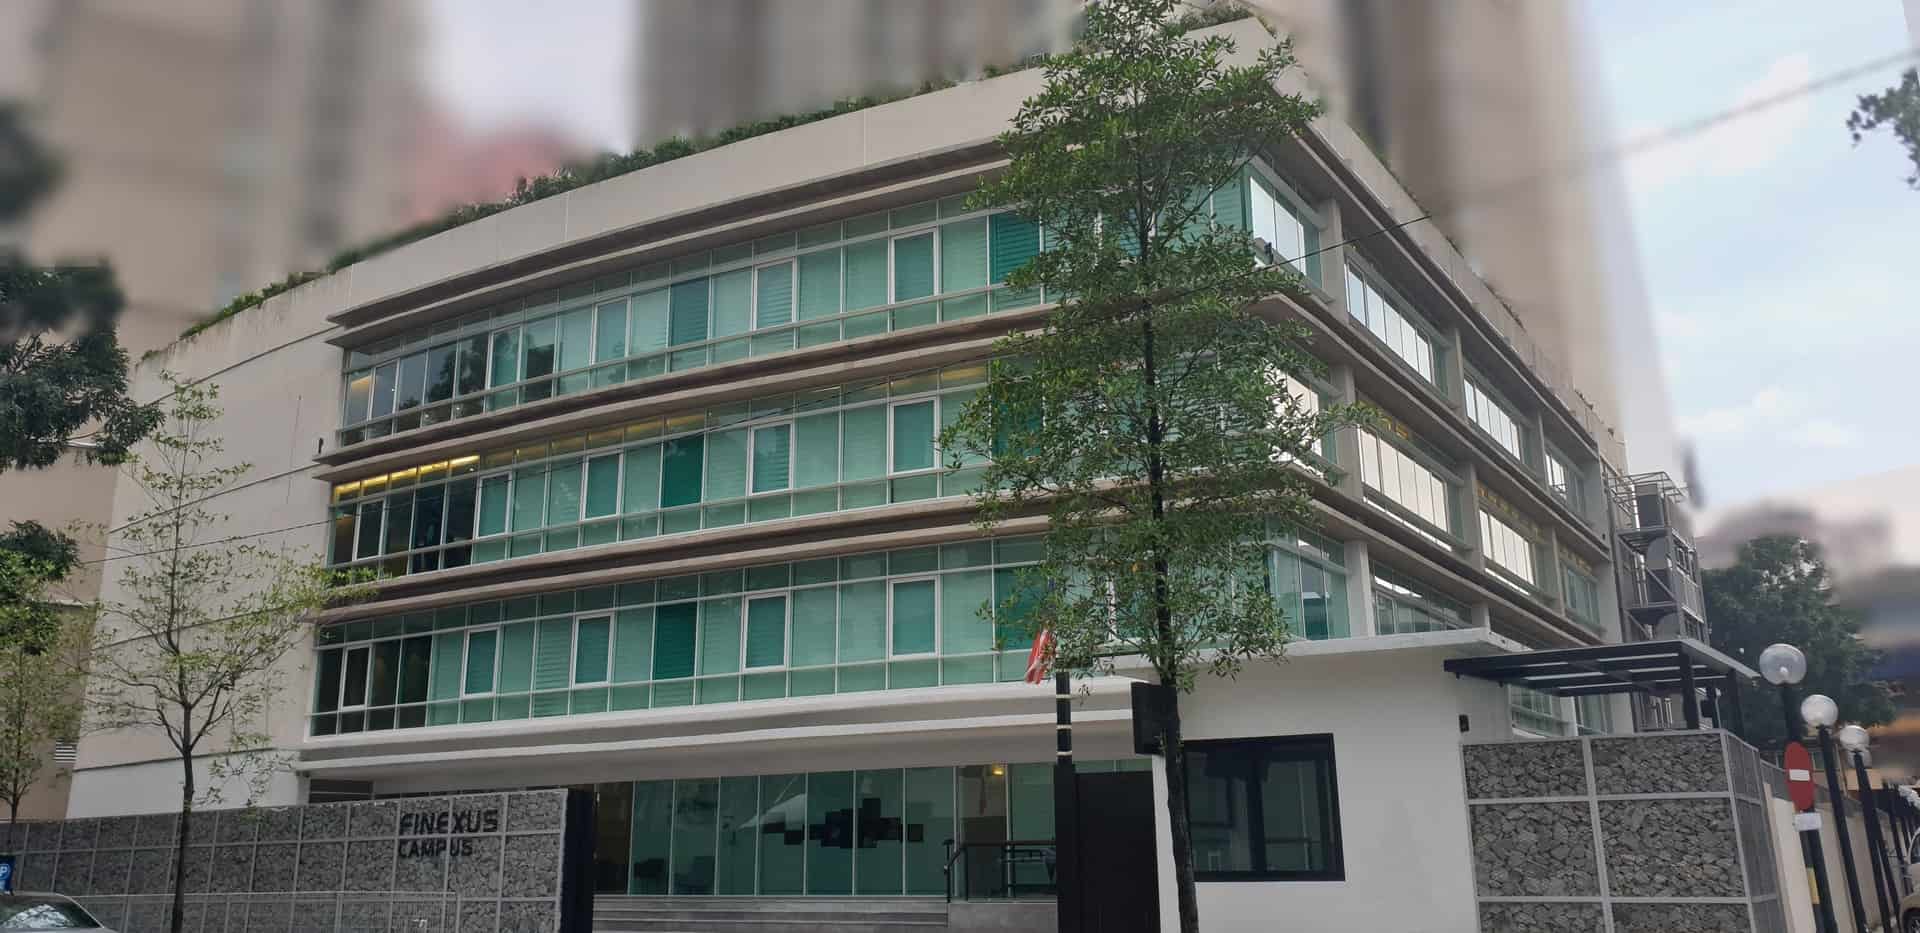 Finexus Campus Building in Jalan Titiwangsa, Kuala Lumpur